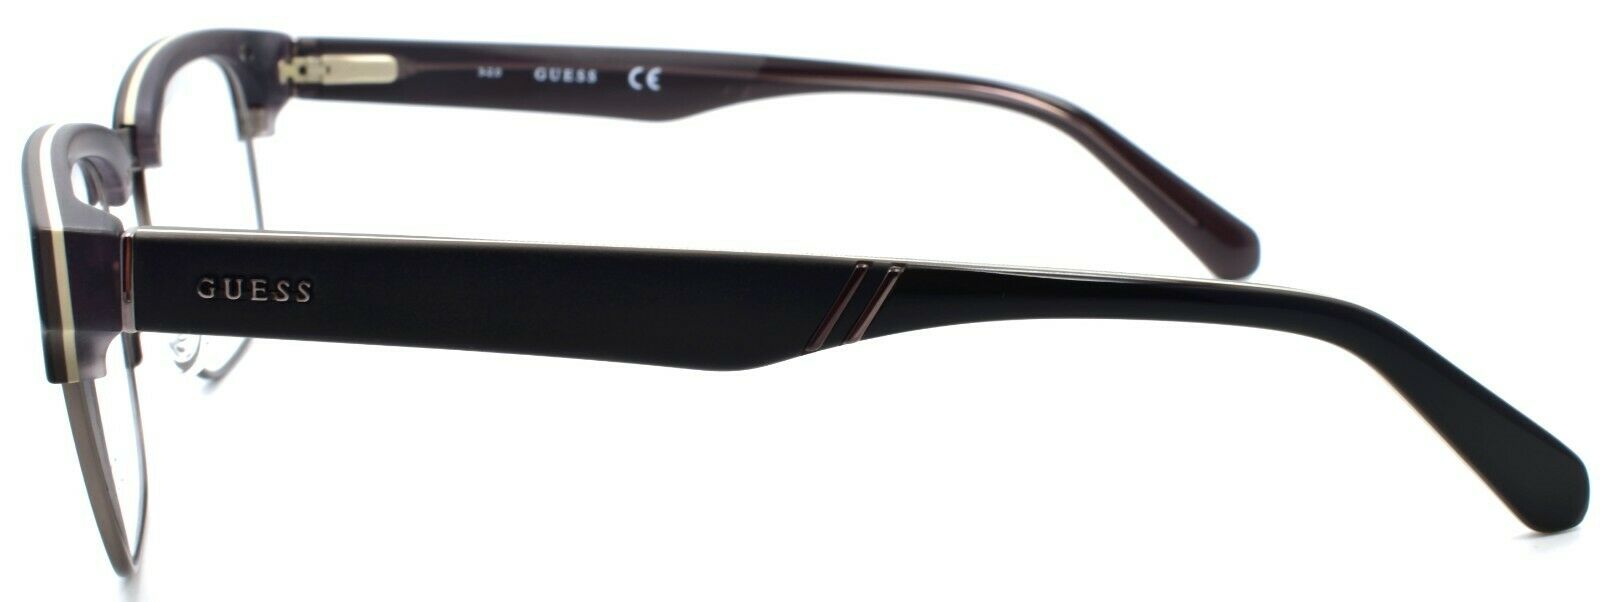 3-GUESS GU1942 002 Men's Eyeglasses Frames 51-19-145 Matte Black-664689919864-IKSpecs